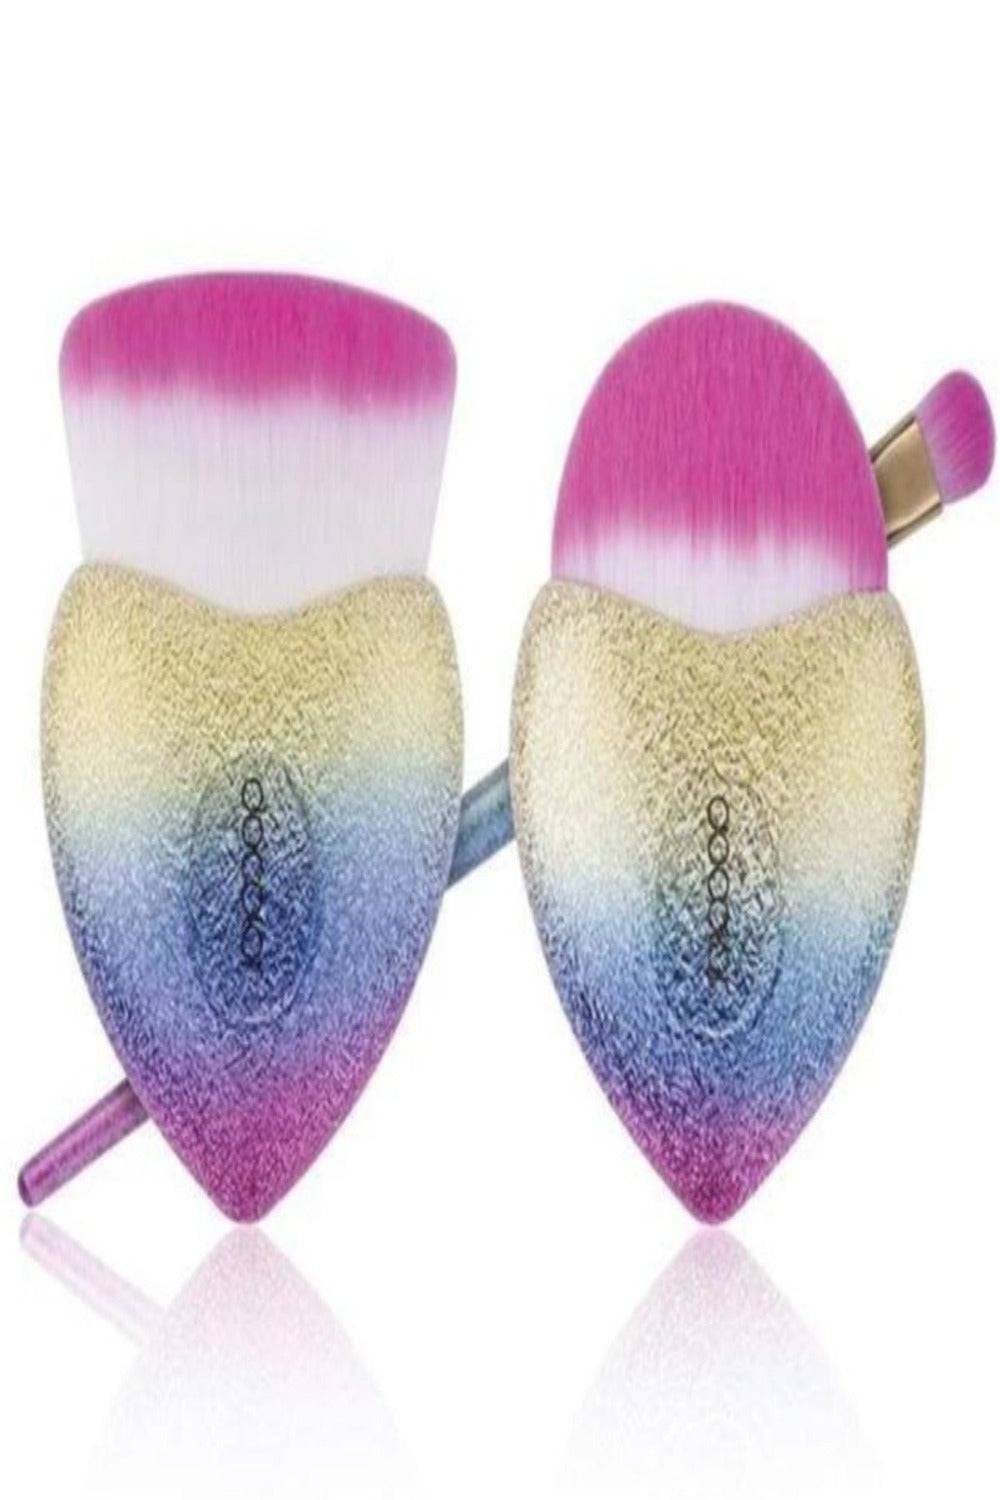 Glitter Rainbow Heart Cupid Makeup Brush Set - 3 Pack - TGC Boutique - Makeup Brushes